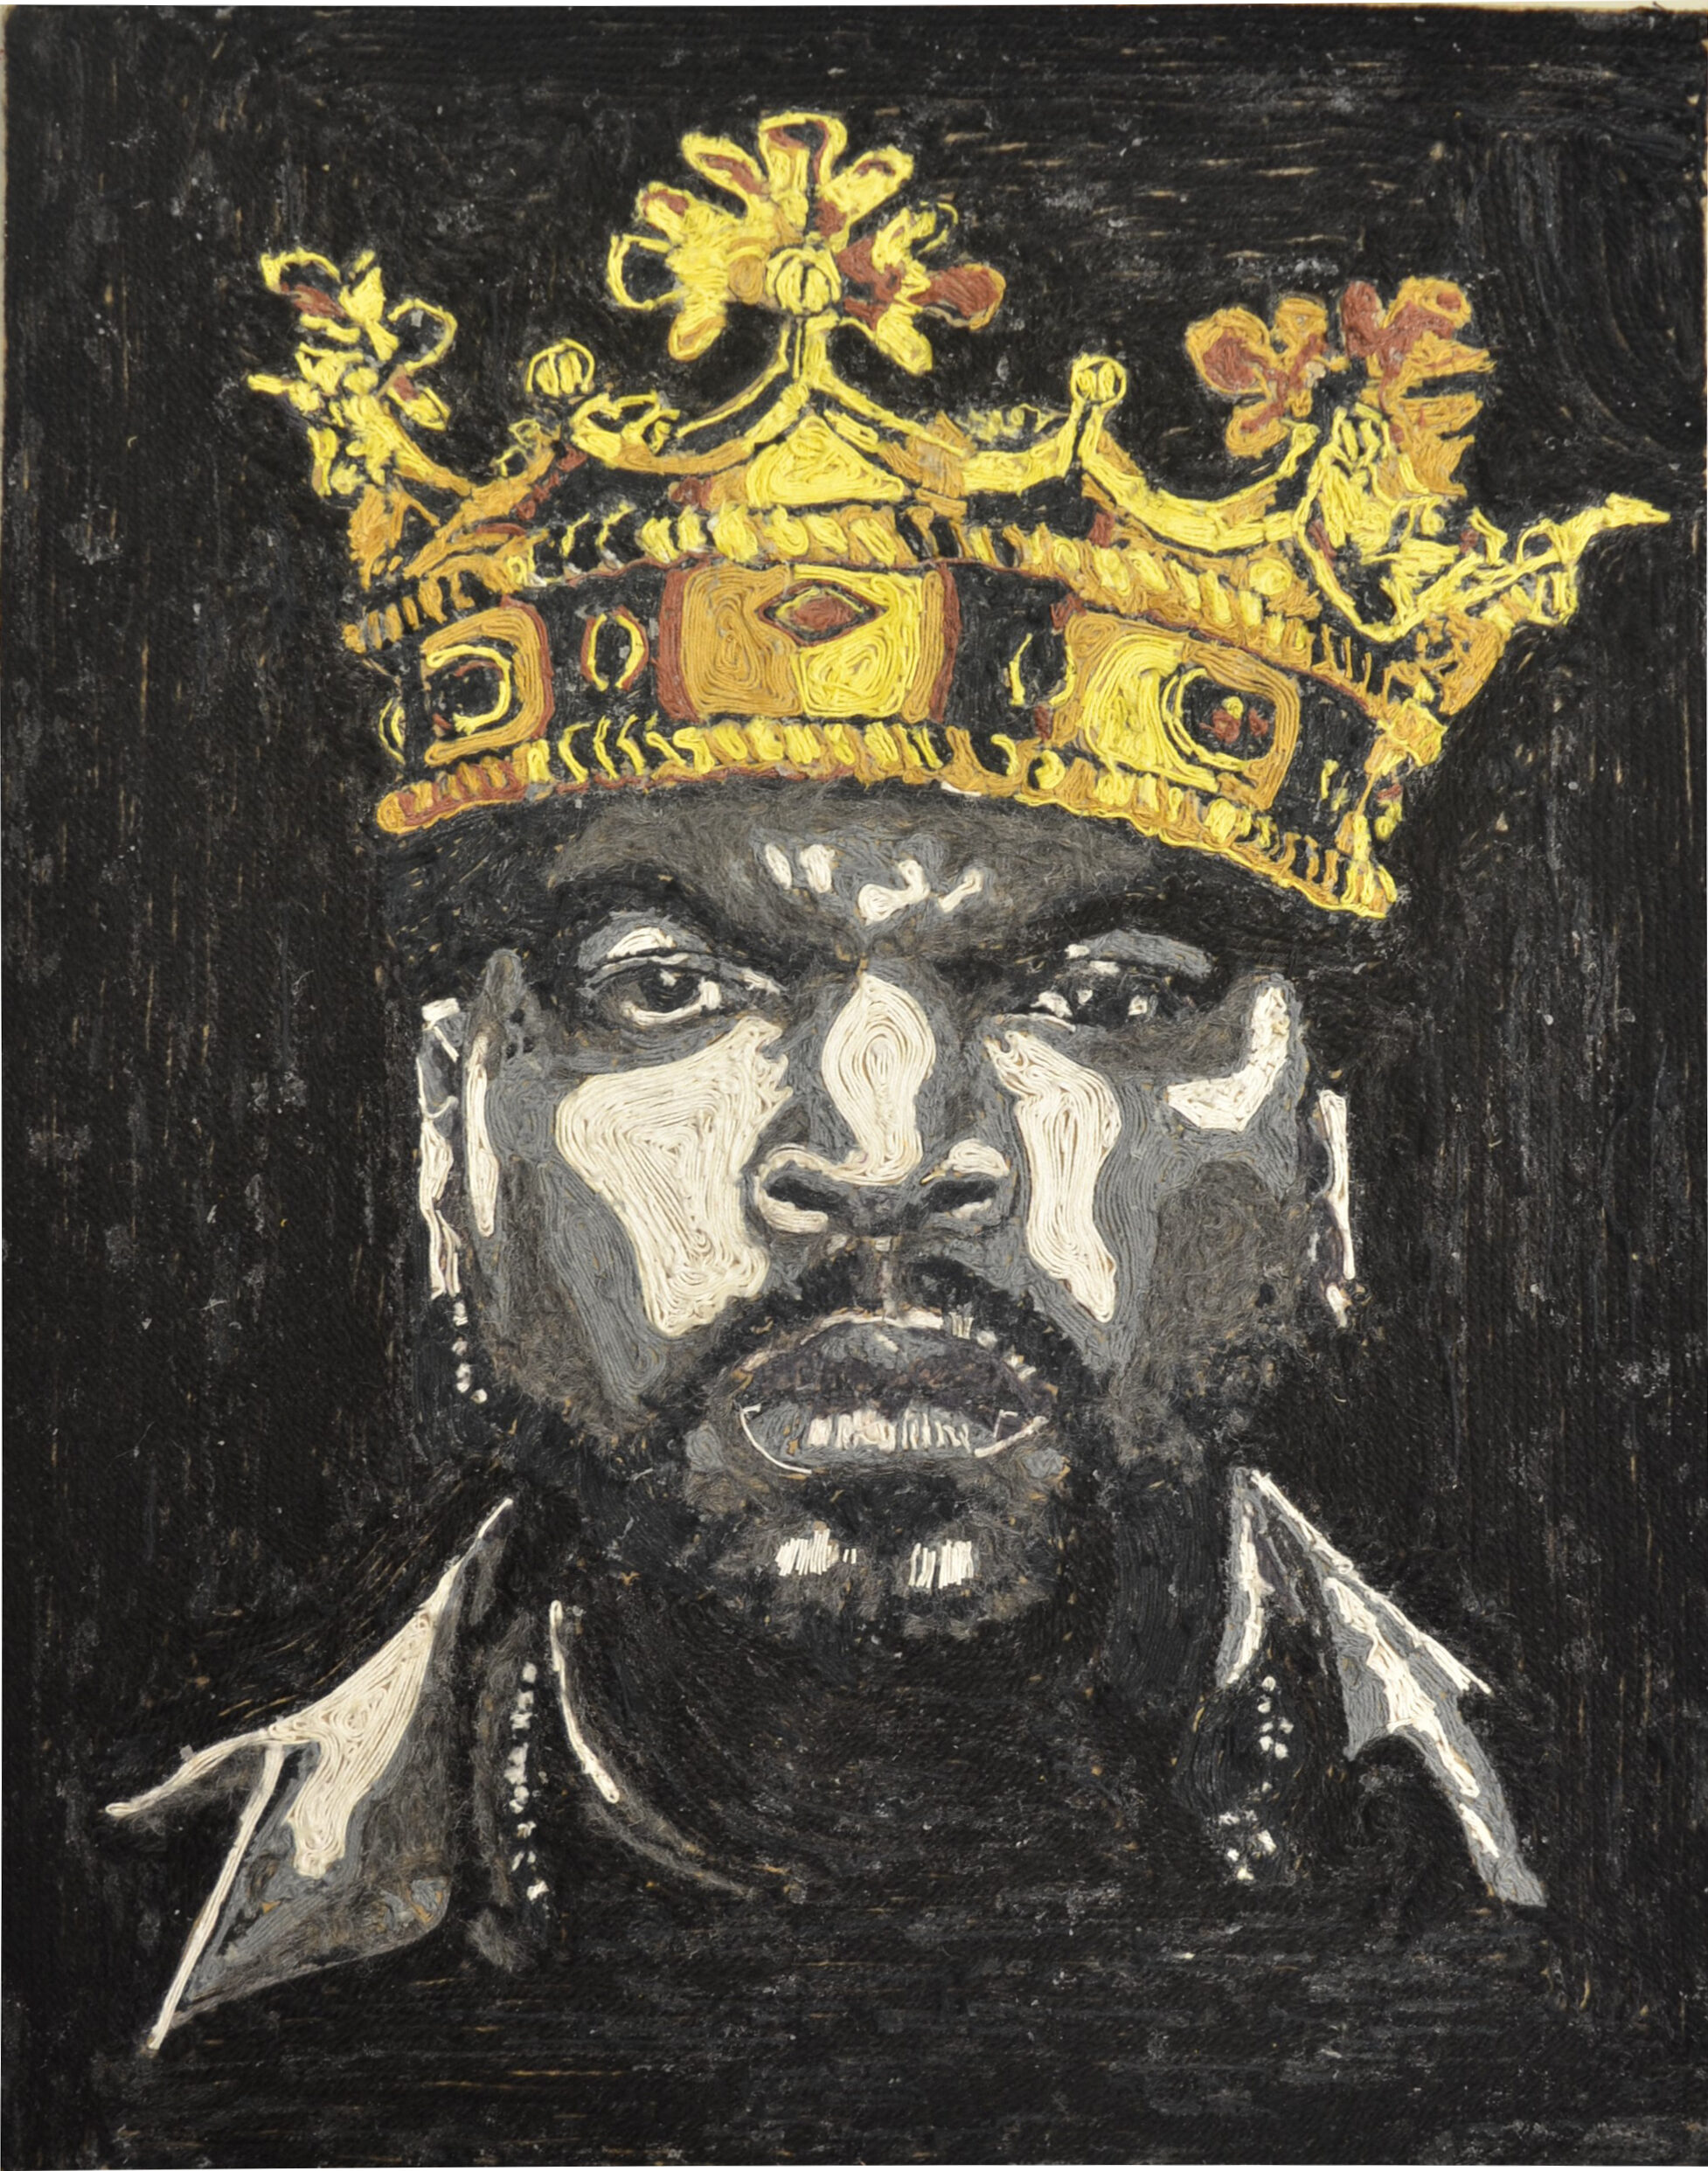 Ice Cube by Darryl Richards